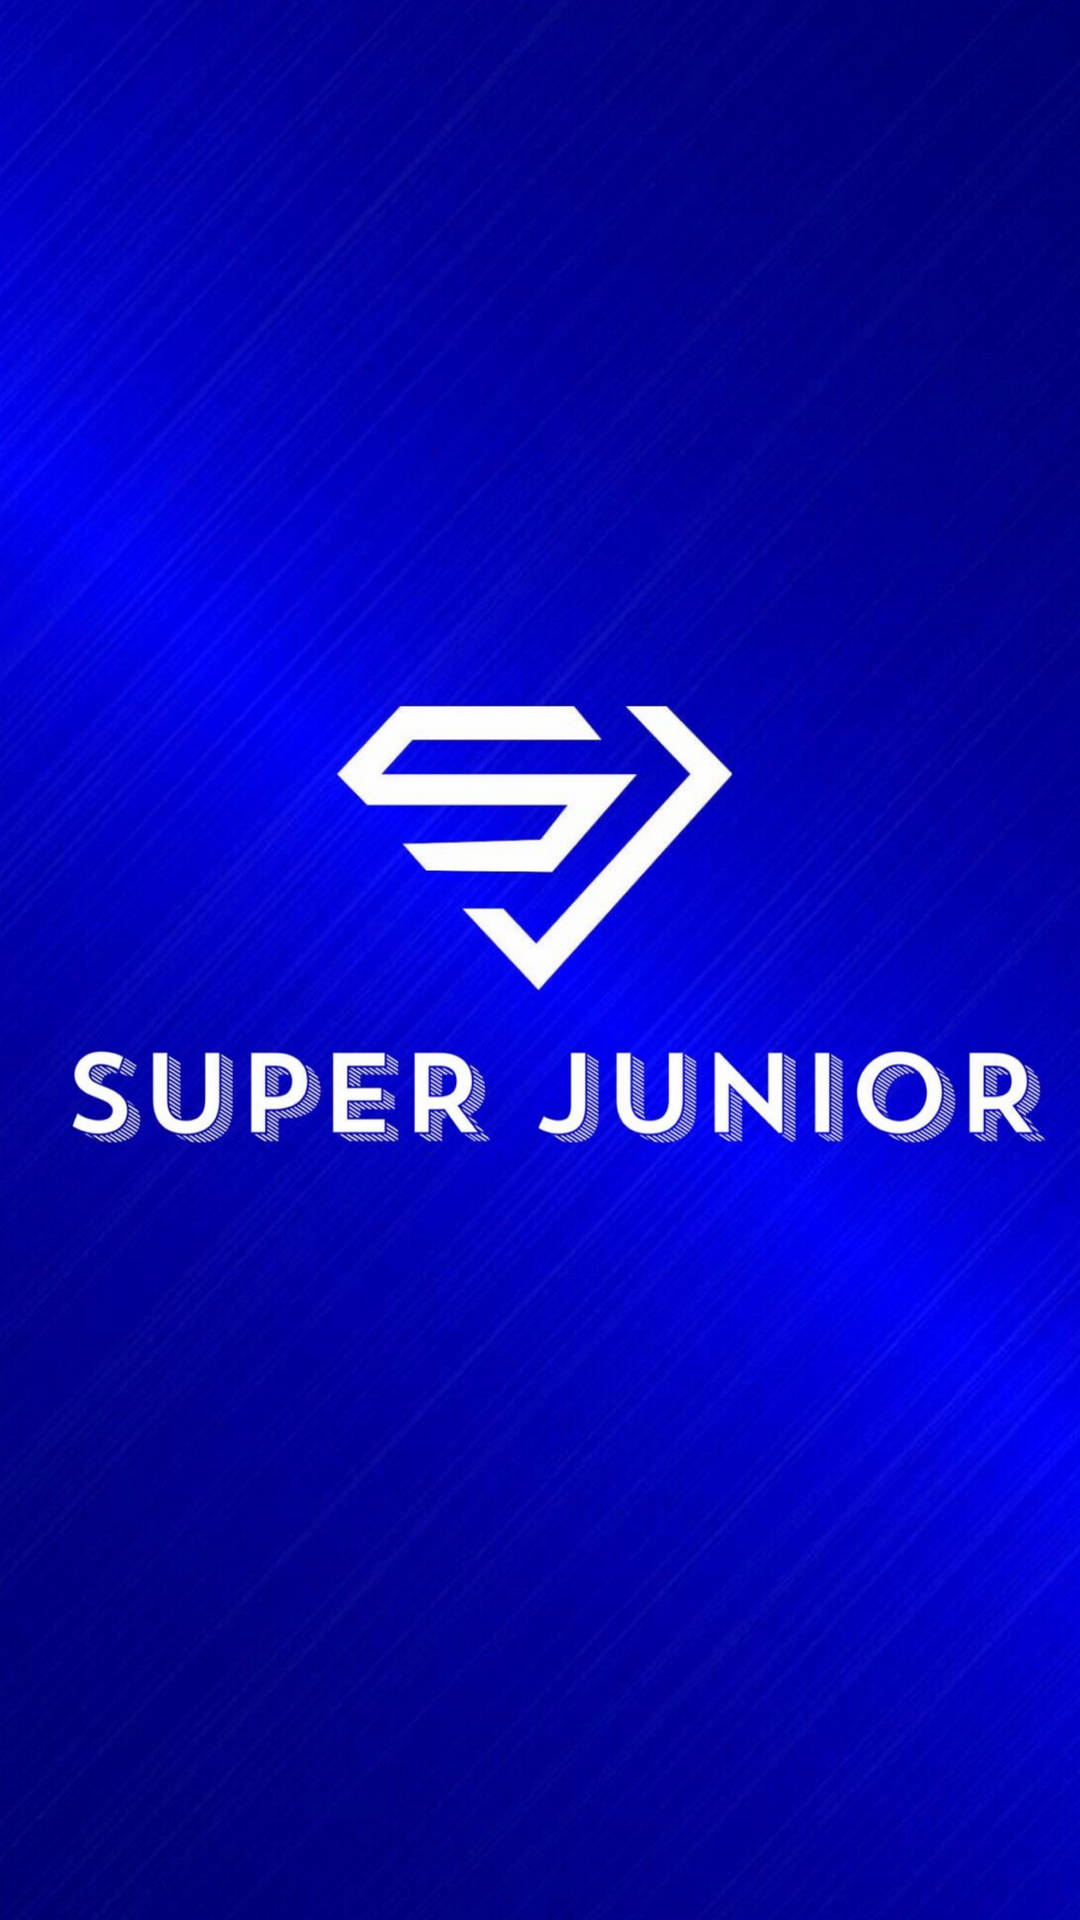 speed logo kpop